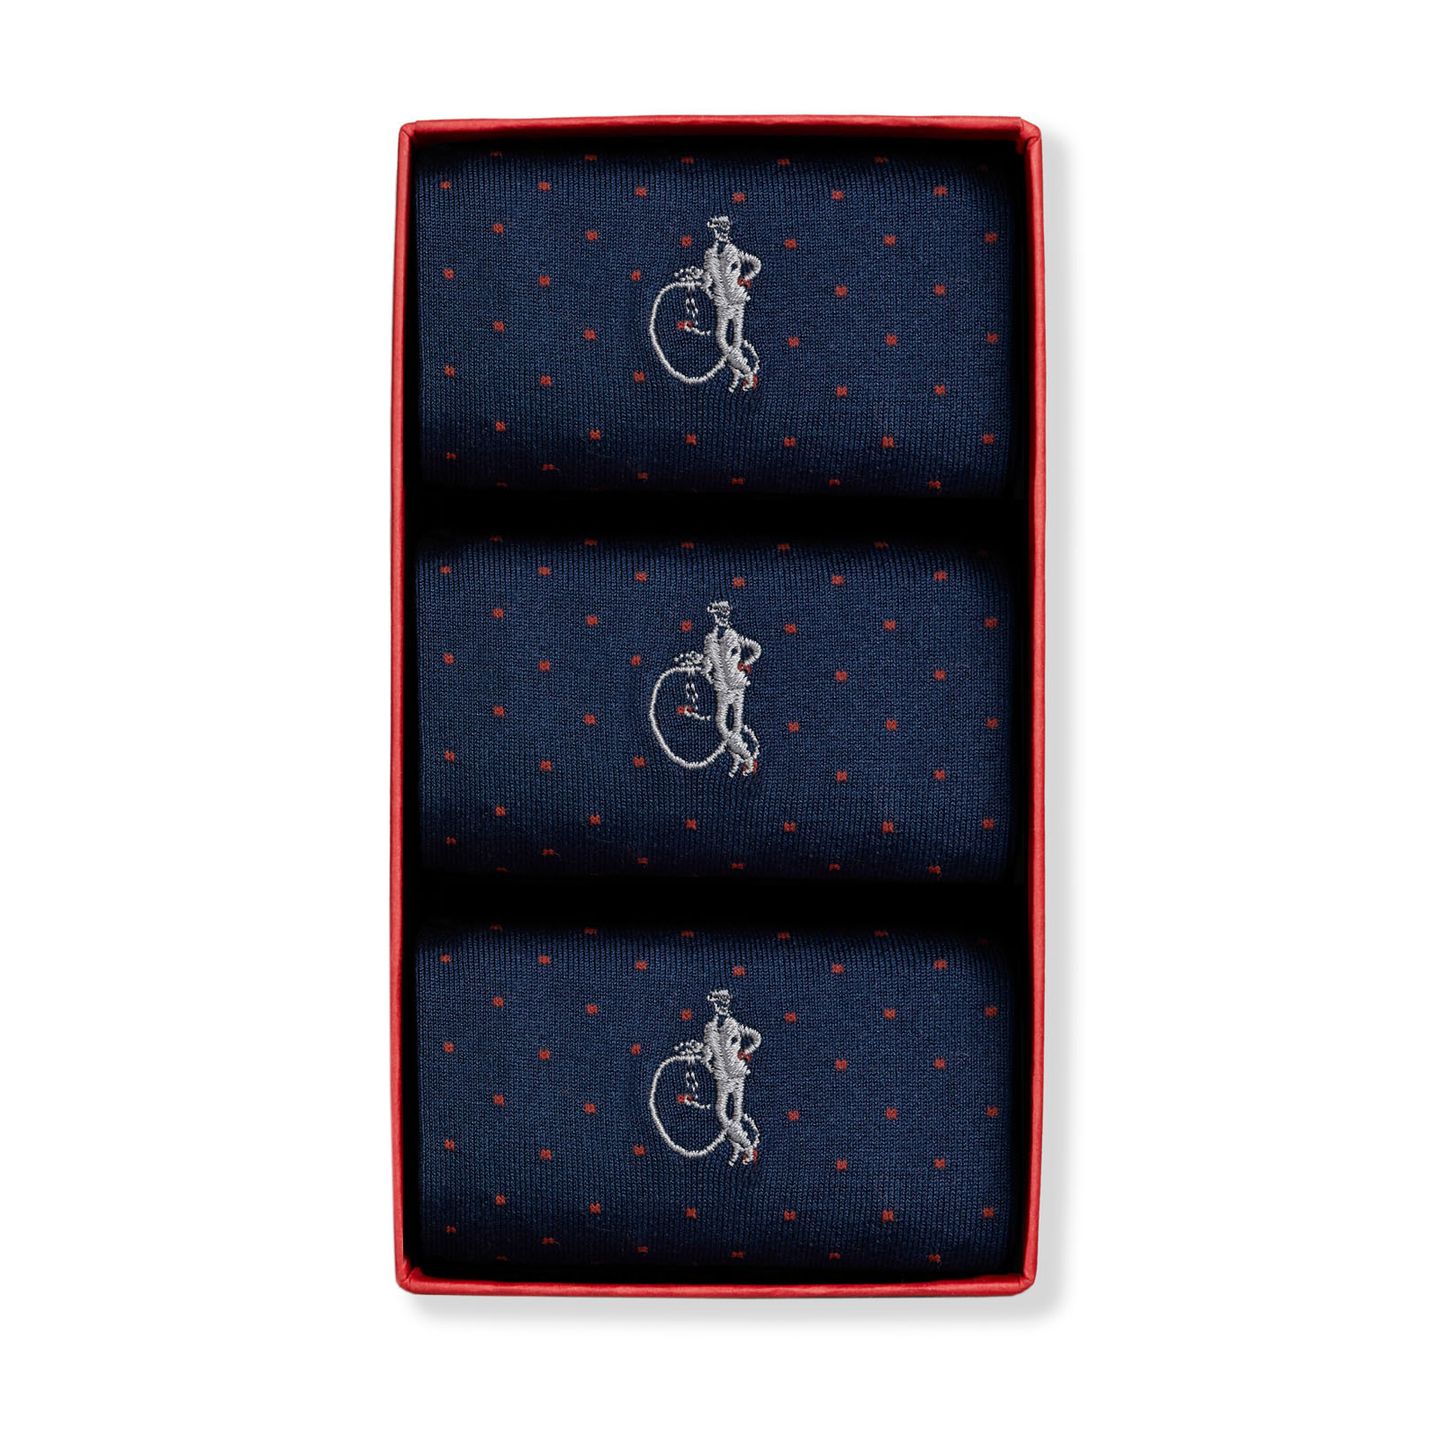 3 pair navy and red polka dot socks in a presentation box